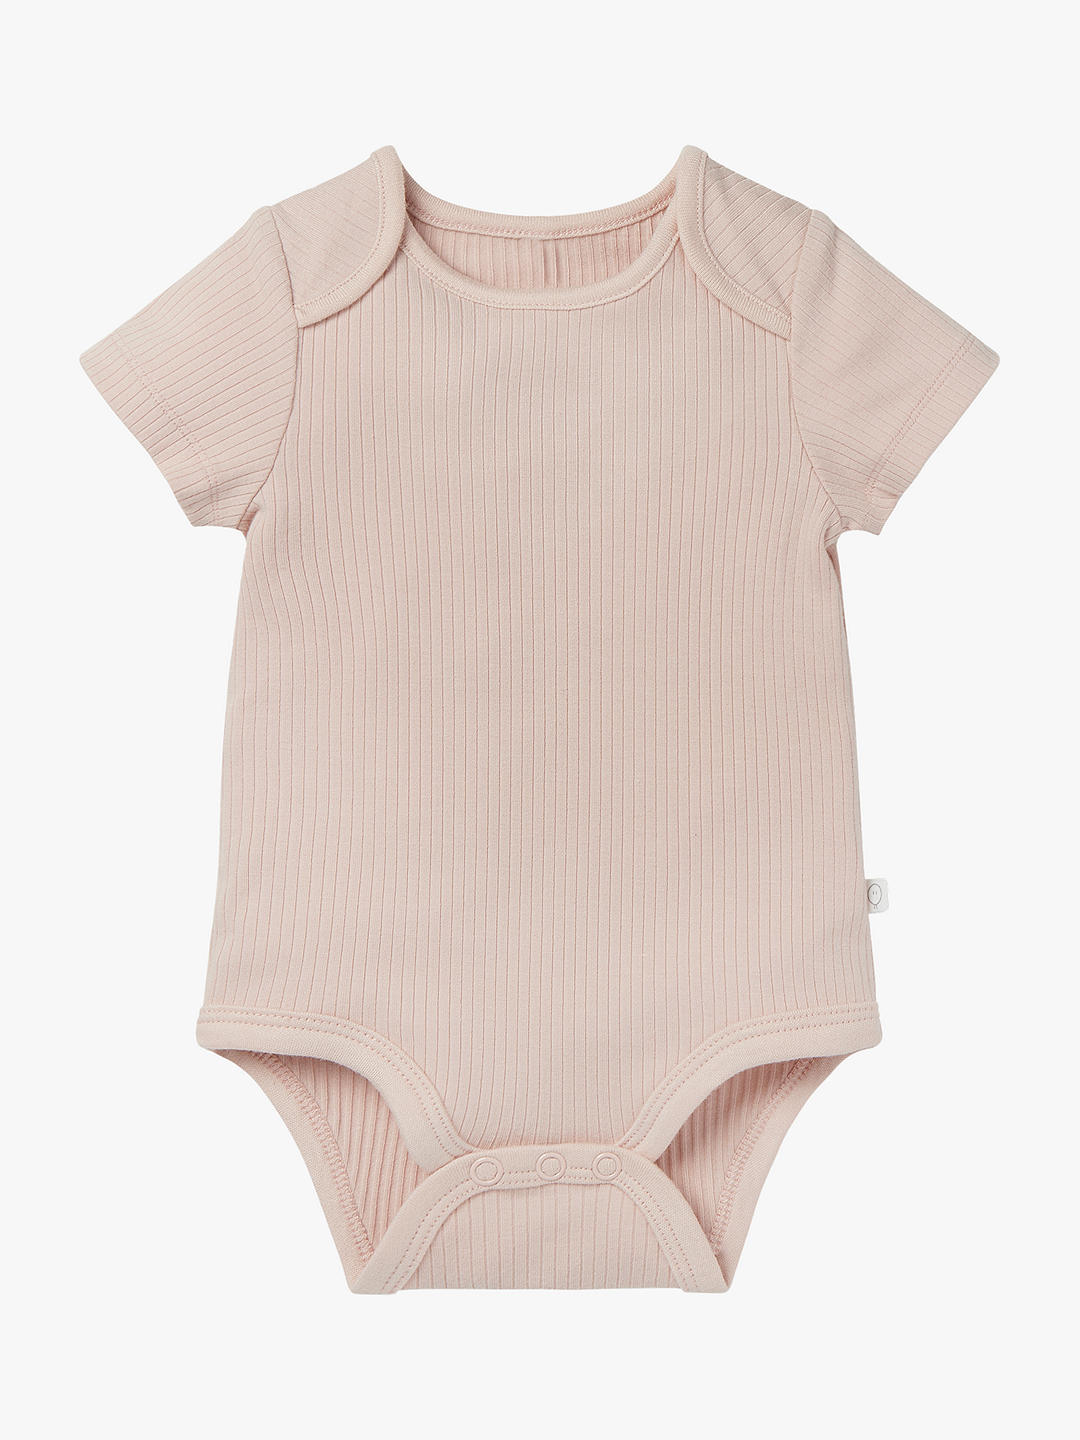 MORI Baby Ribbed Short Sleeve Bodysuit, Blush 